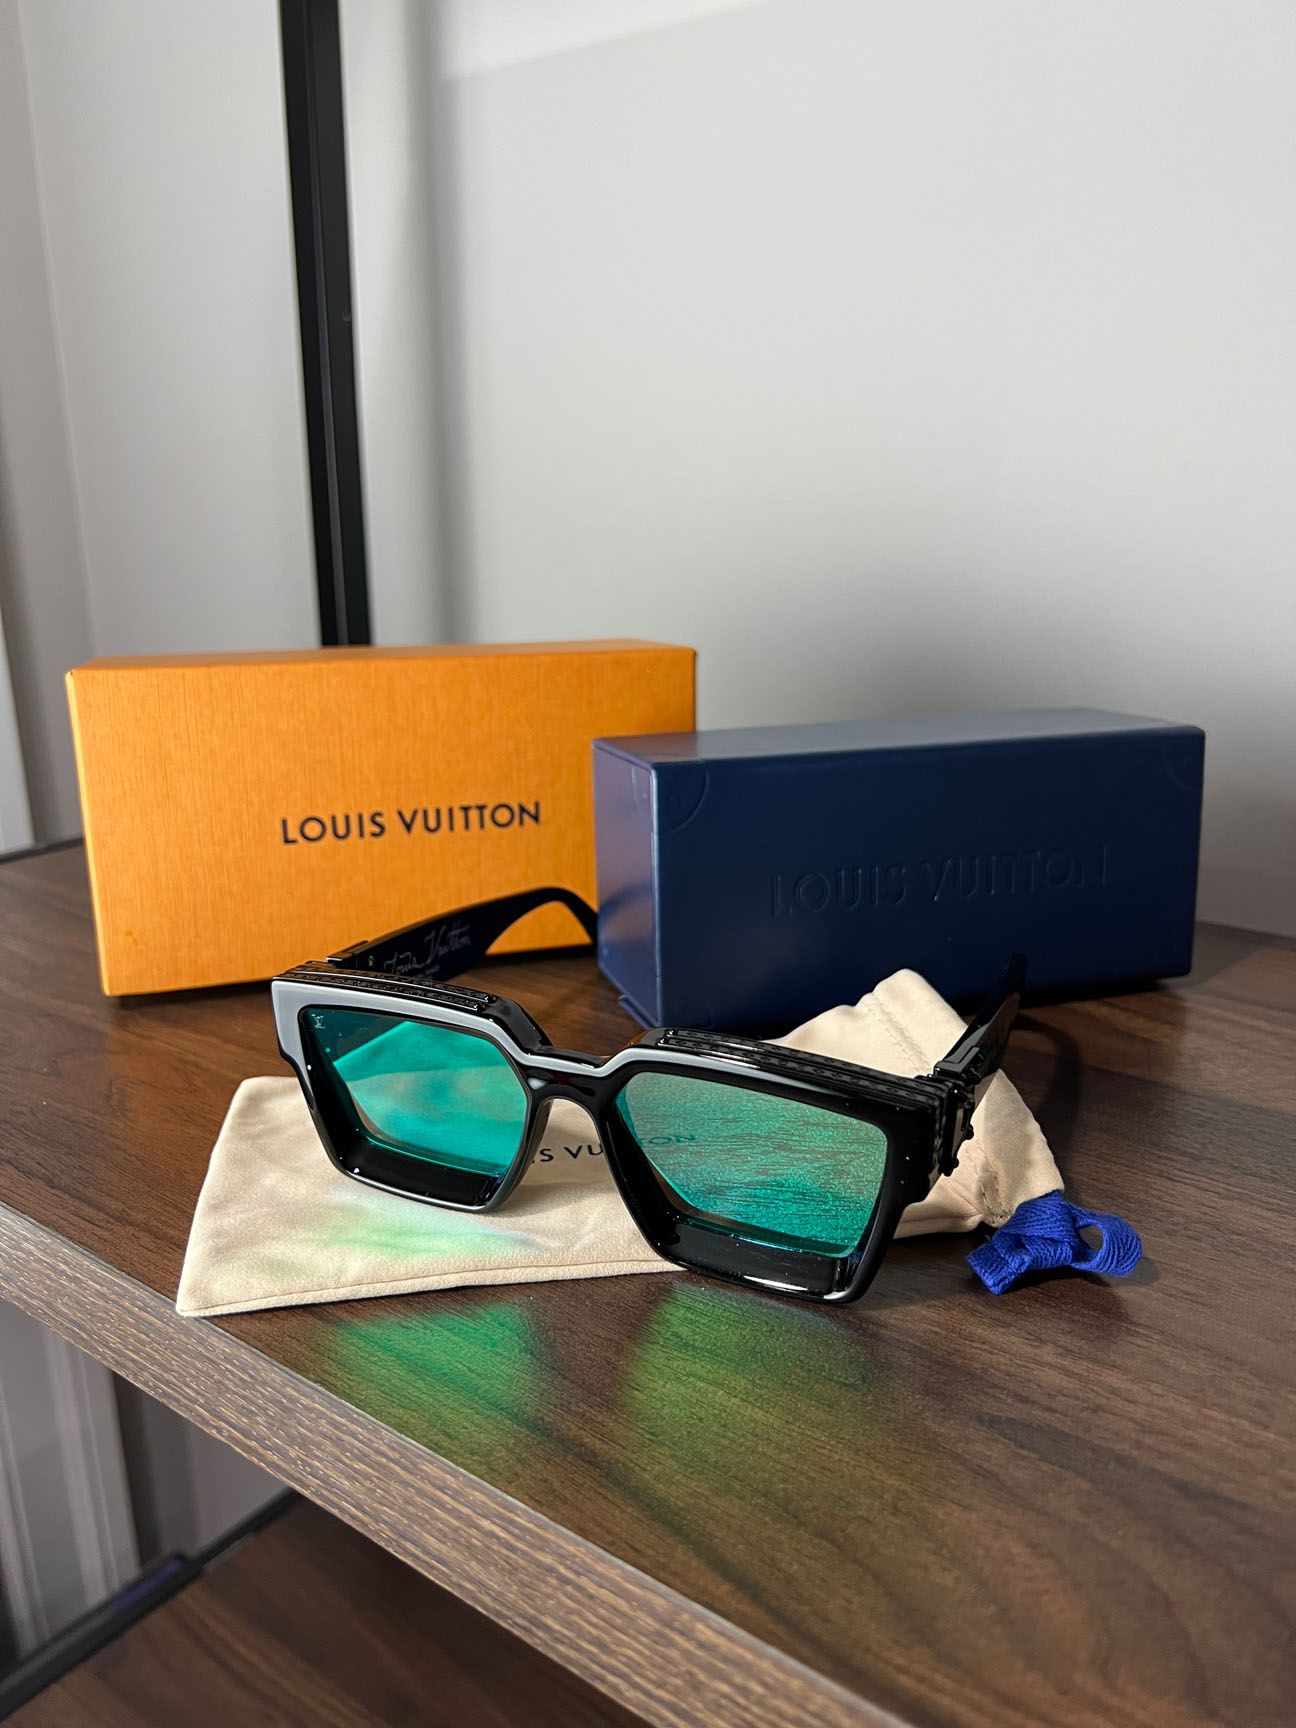 Louis Vuitton on X: #LVMenFW21 Tourist vs. Purist. @virgilabloh